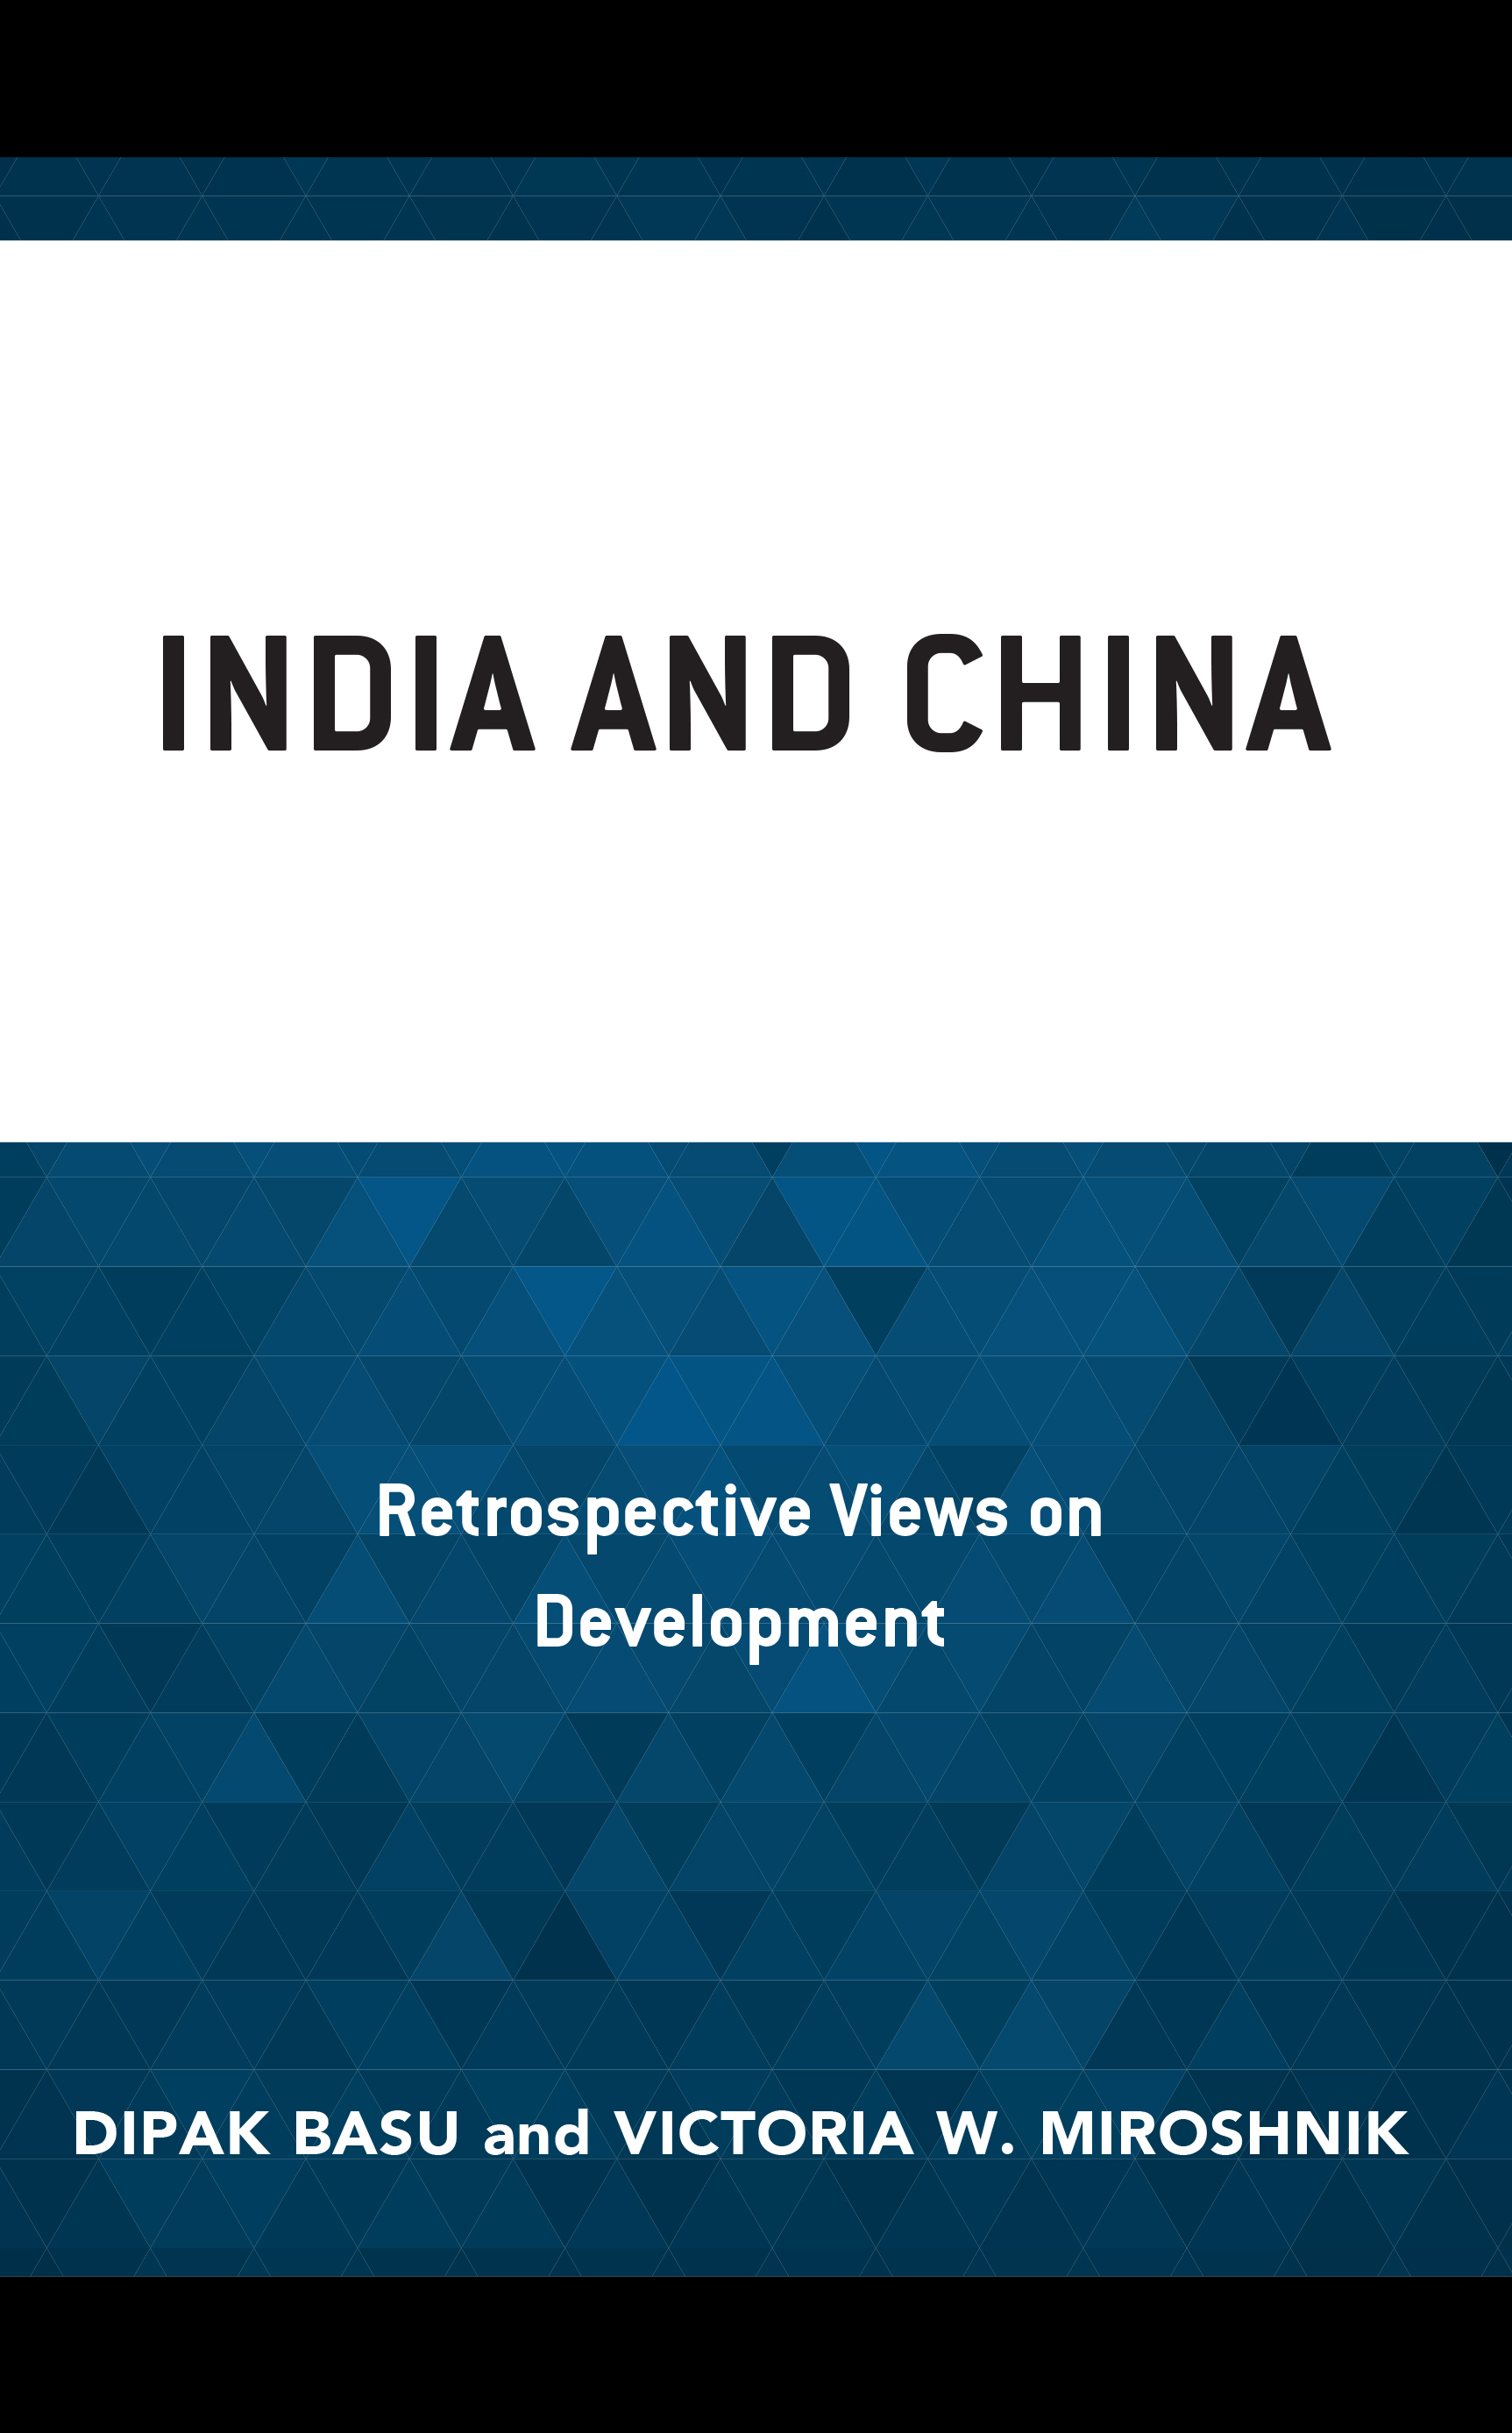 India and China: Retrospective Views on Development